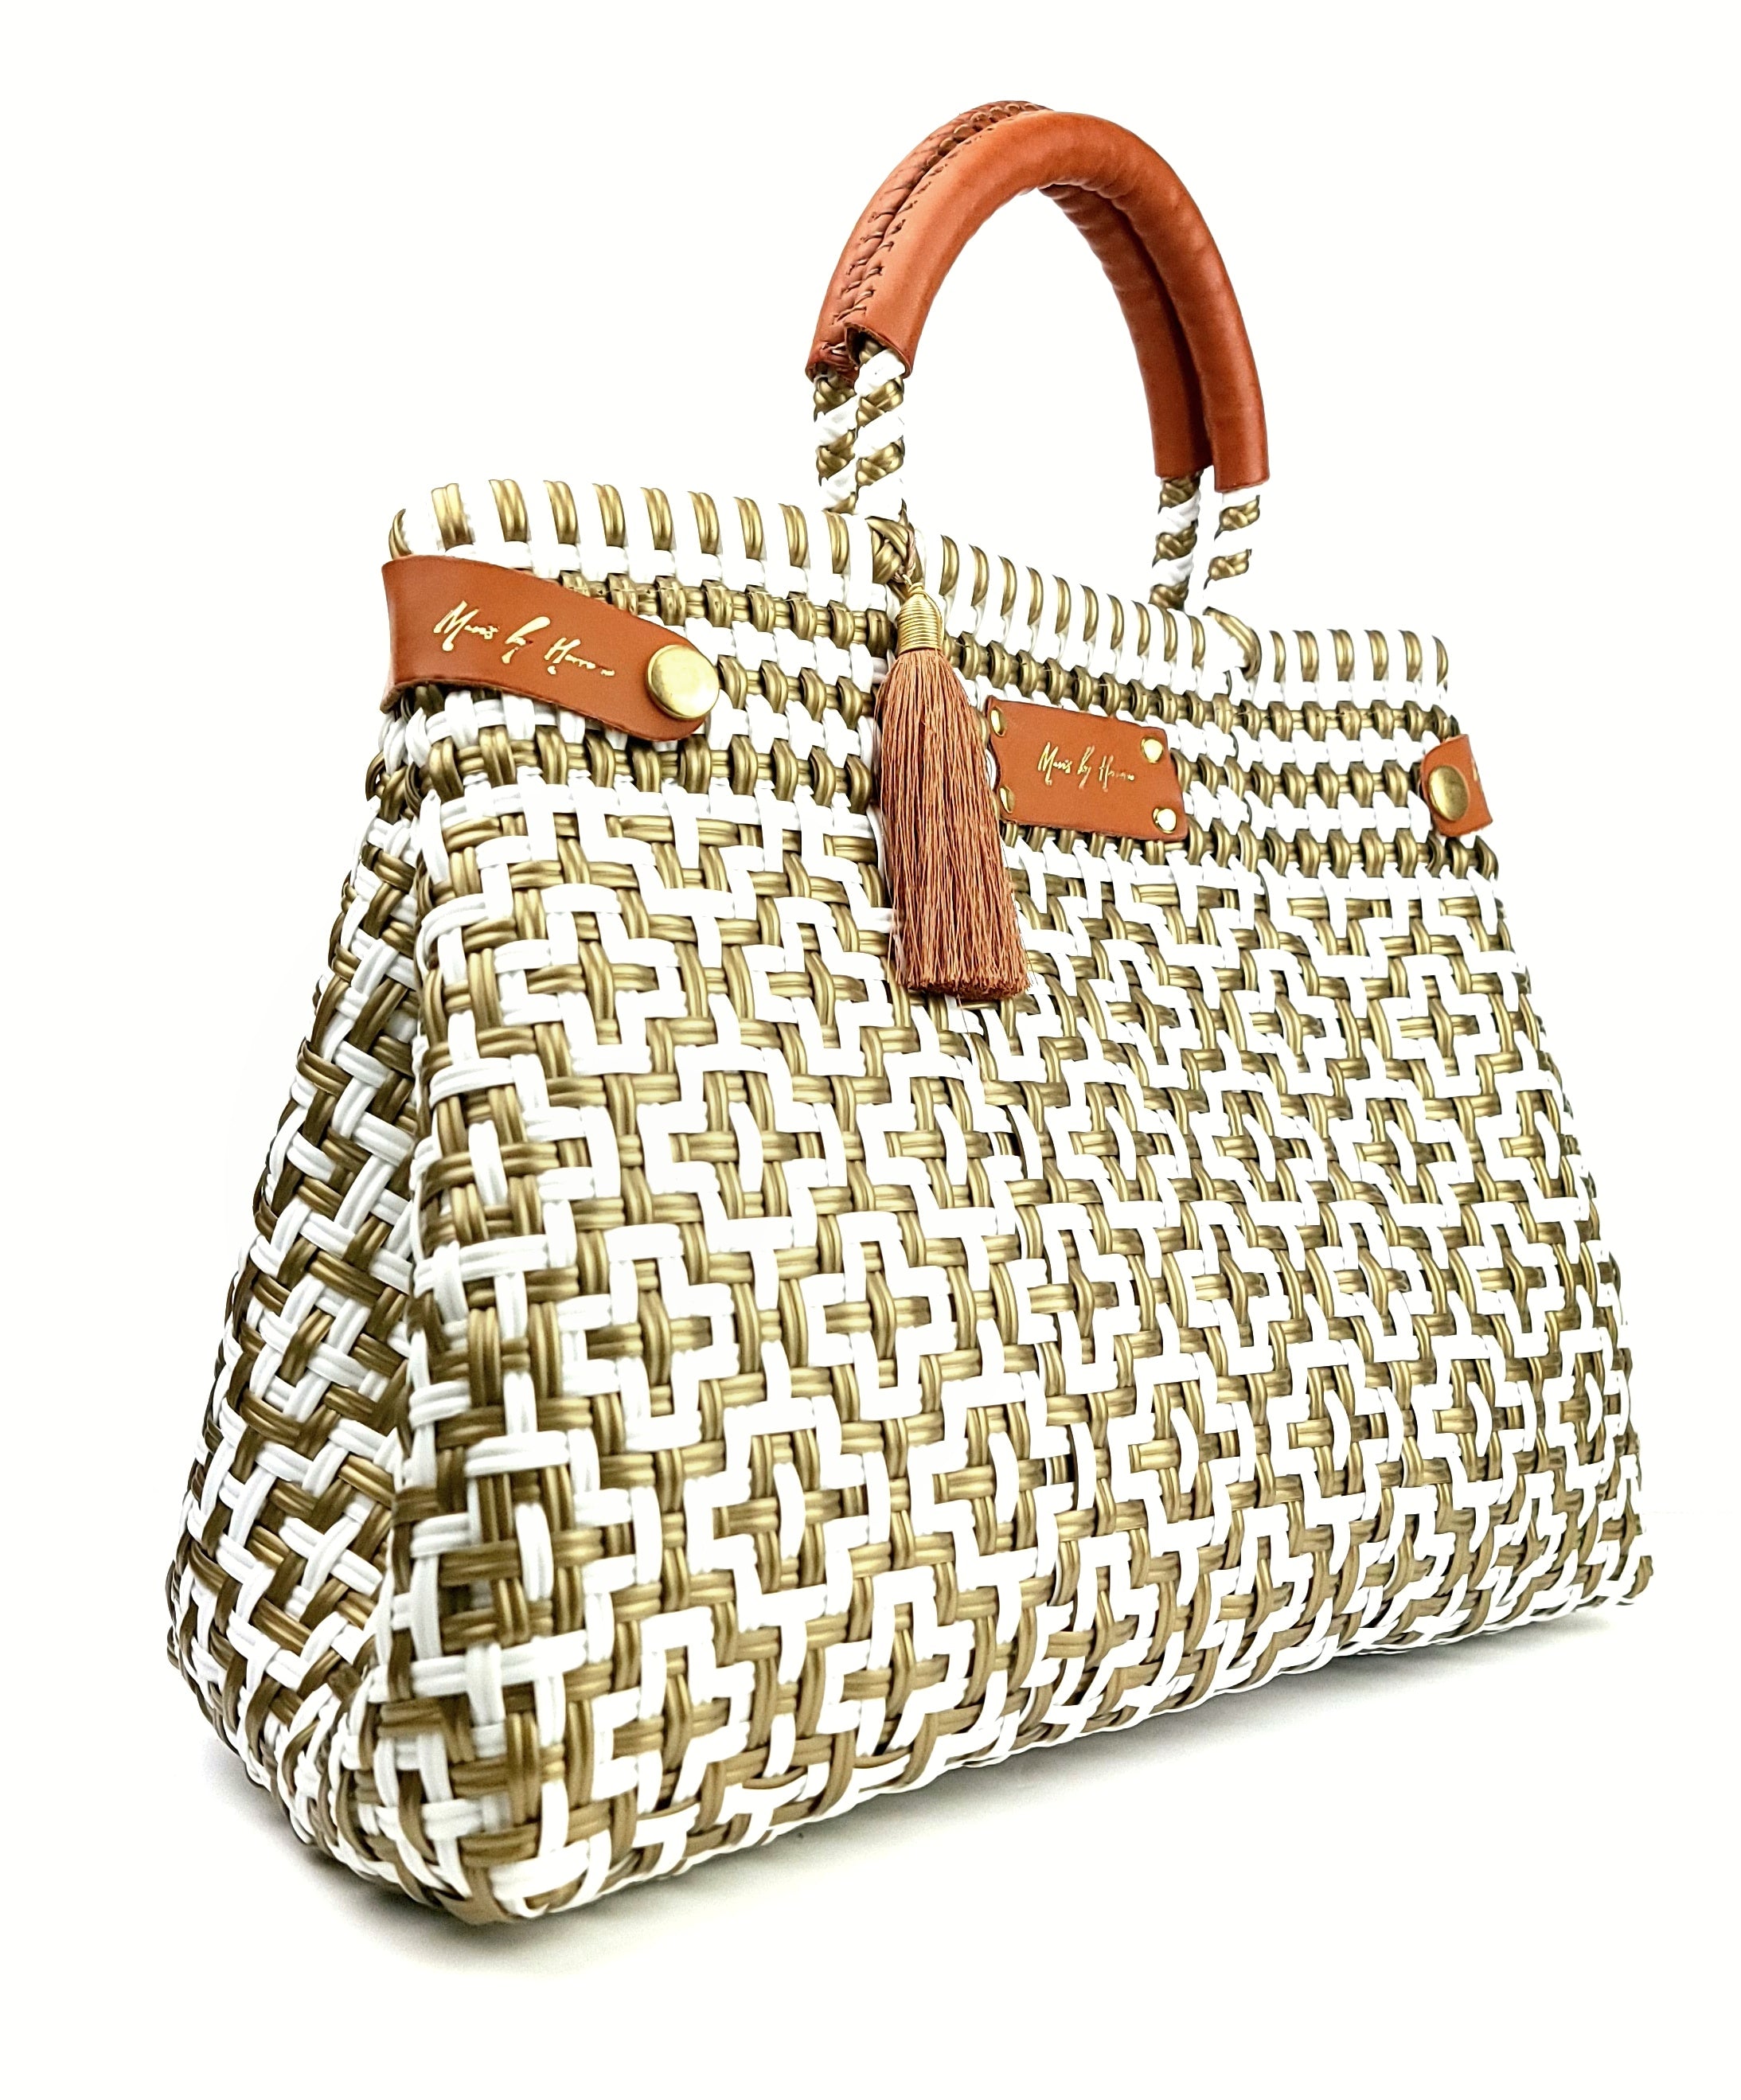 Shop Luxury Sustainable Bags. Fashion Designer Mavis by Herrera. handmade pieces. Free Shipping. Luxury Eco Bags.